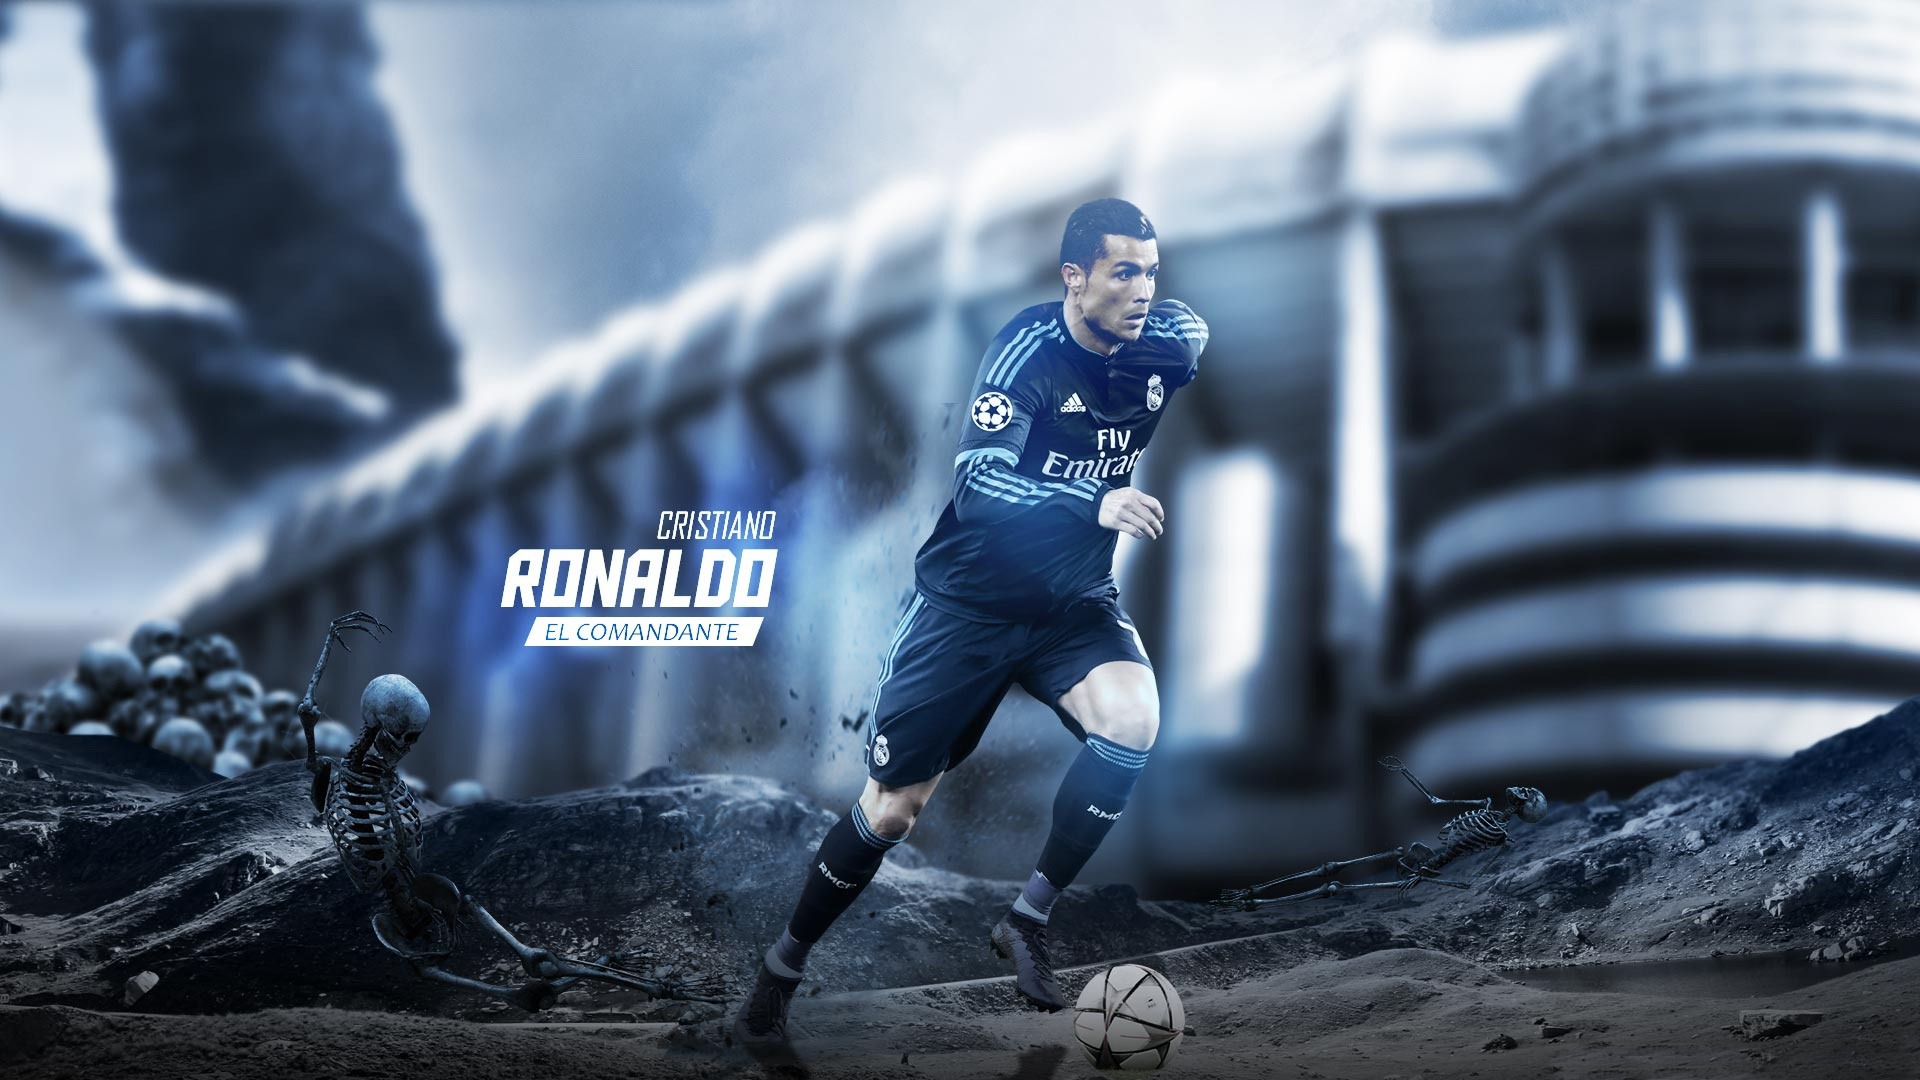 Cristiano_Ronaldo-Sports_Poster_Wallpaper_1920x1080.jpg